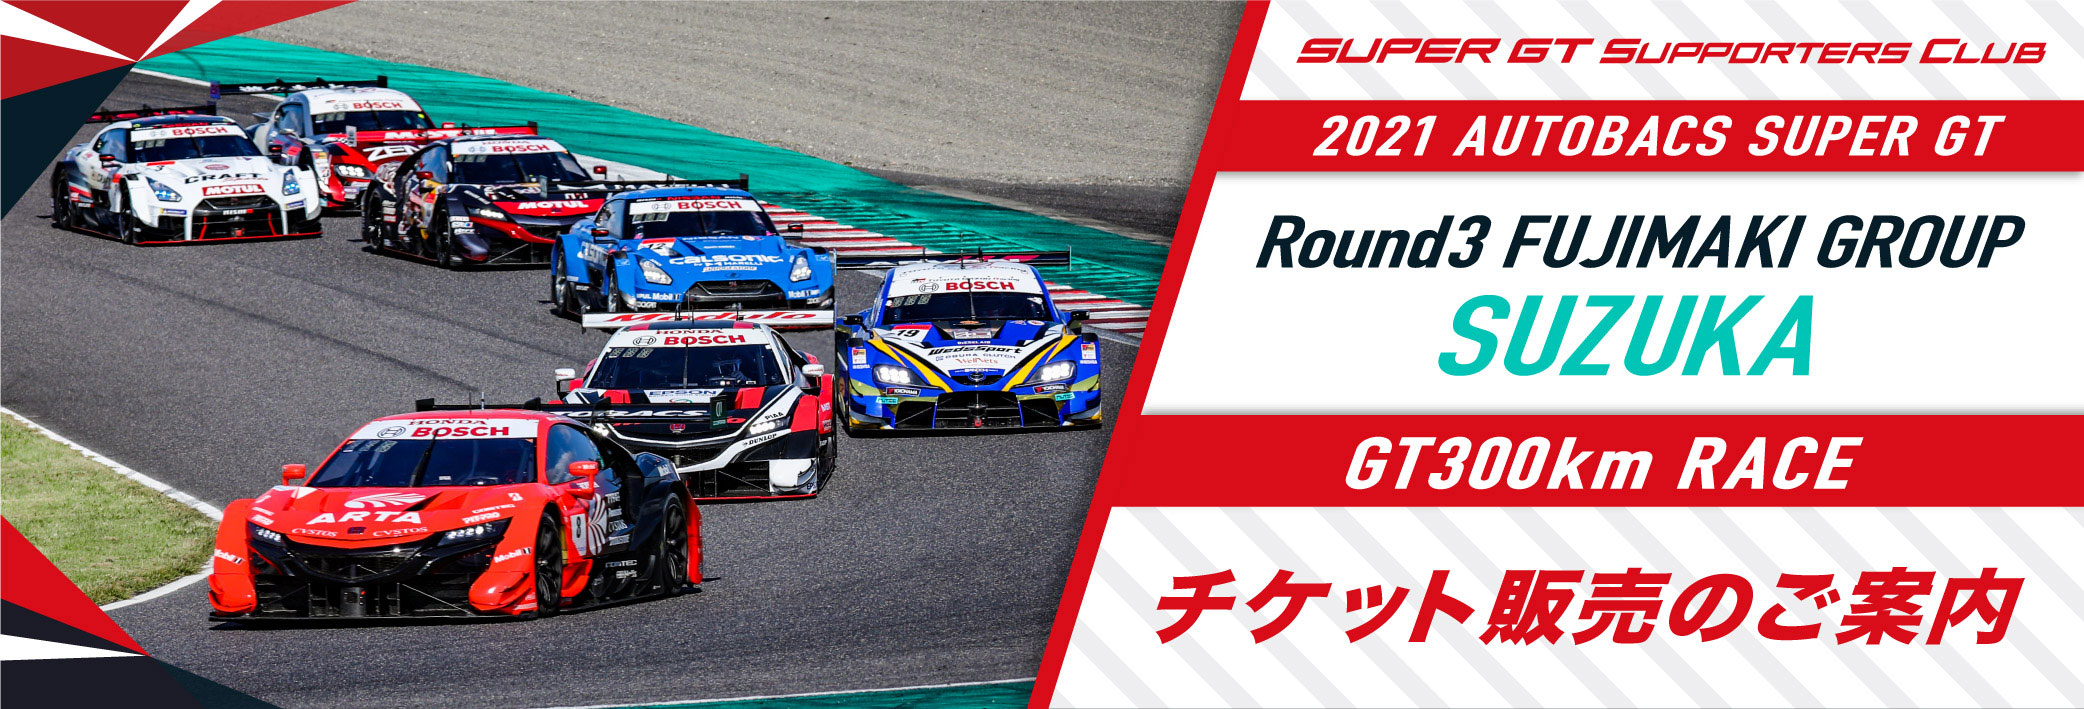 2021 AUTOBACS SUPER GT Round3 FUJIMAKI GROUP SUZUKA GT 300km RACE 